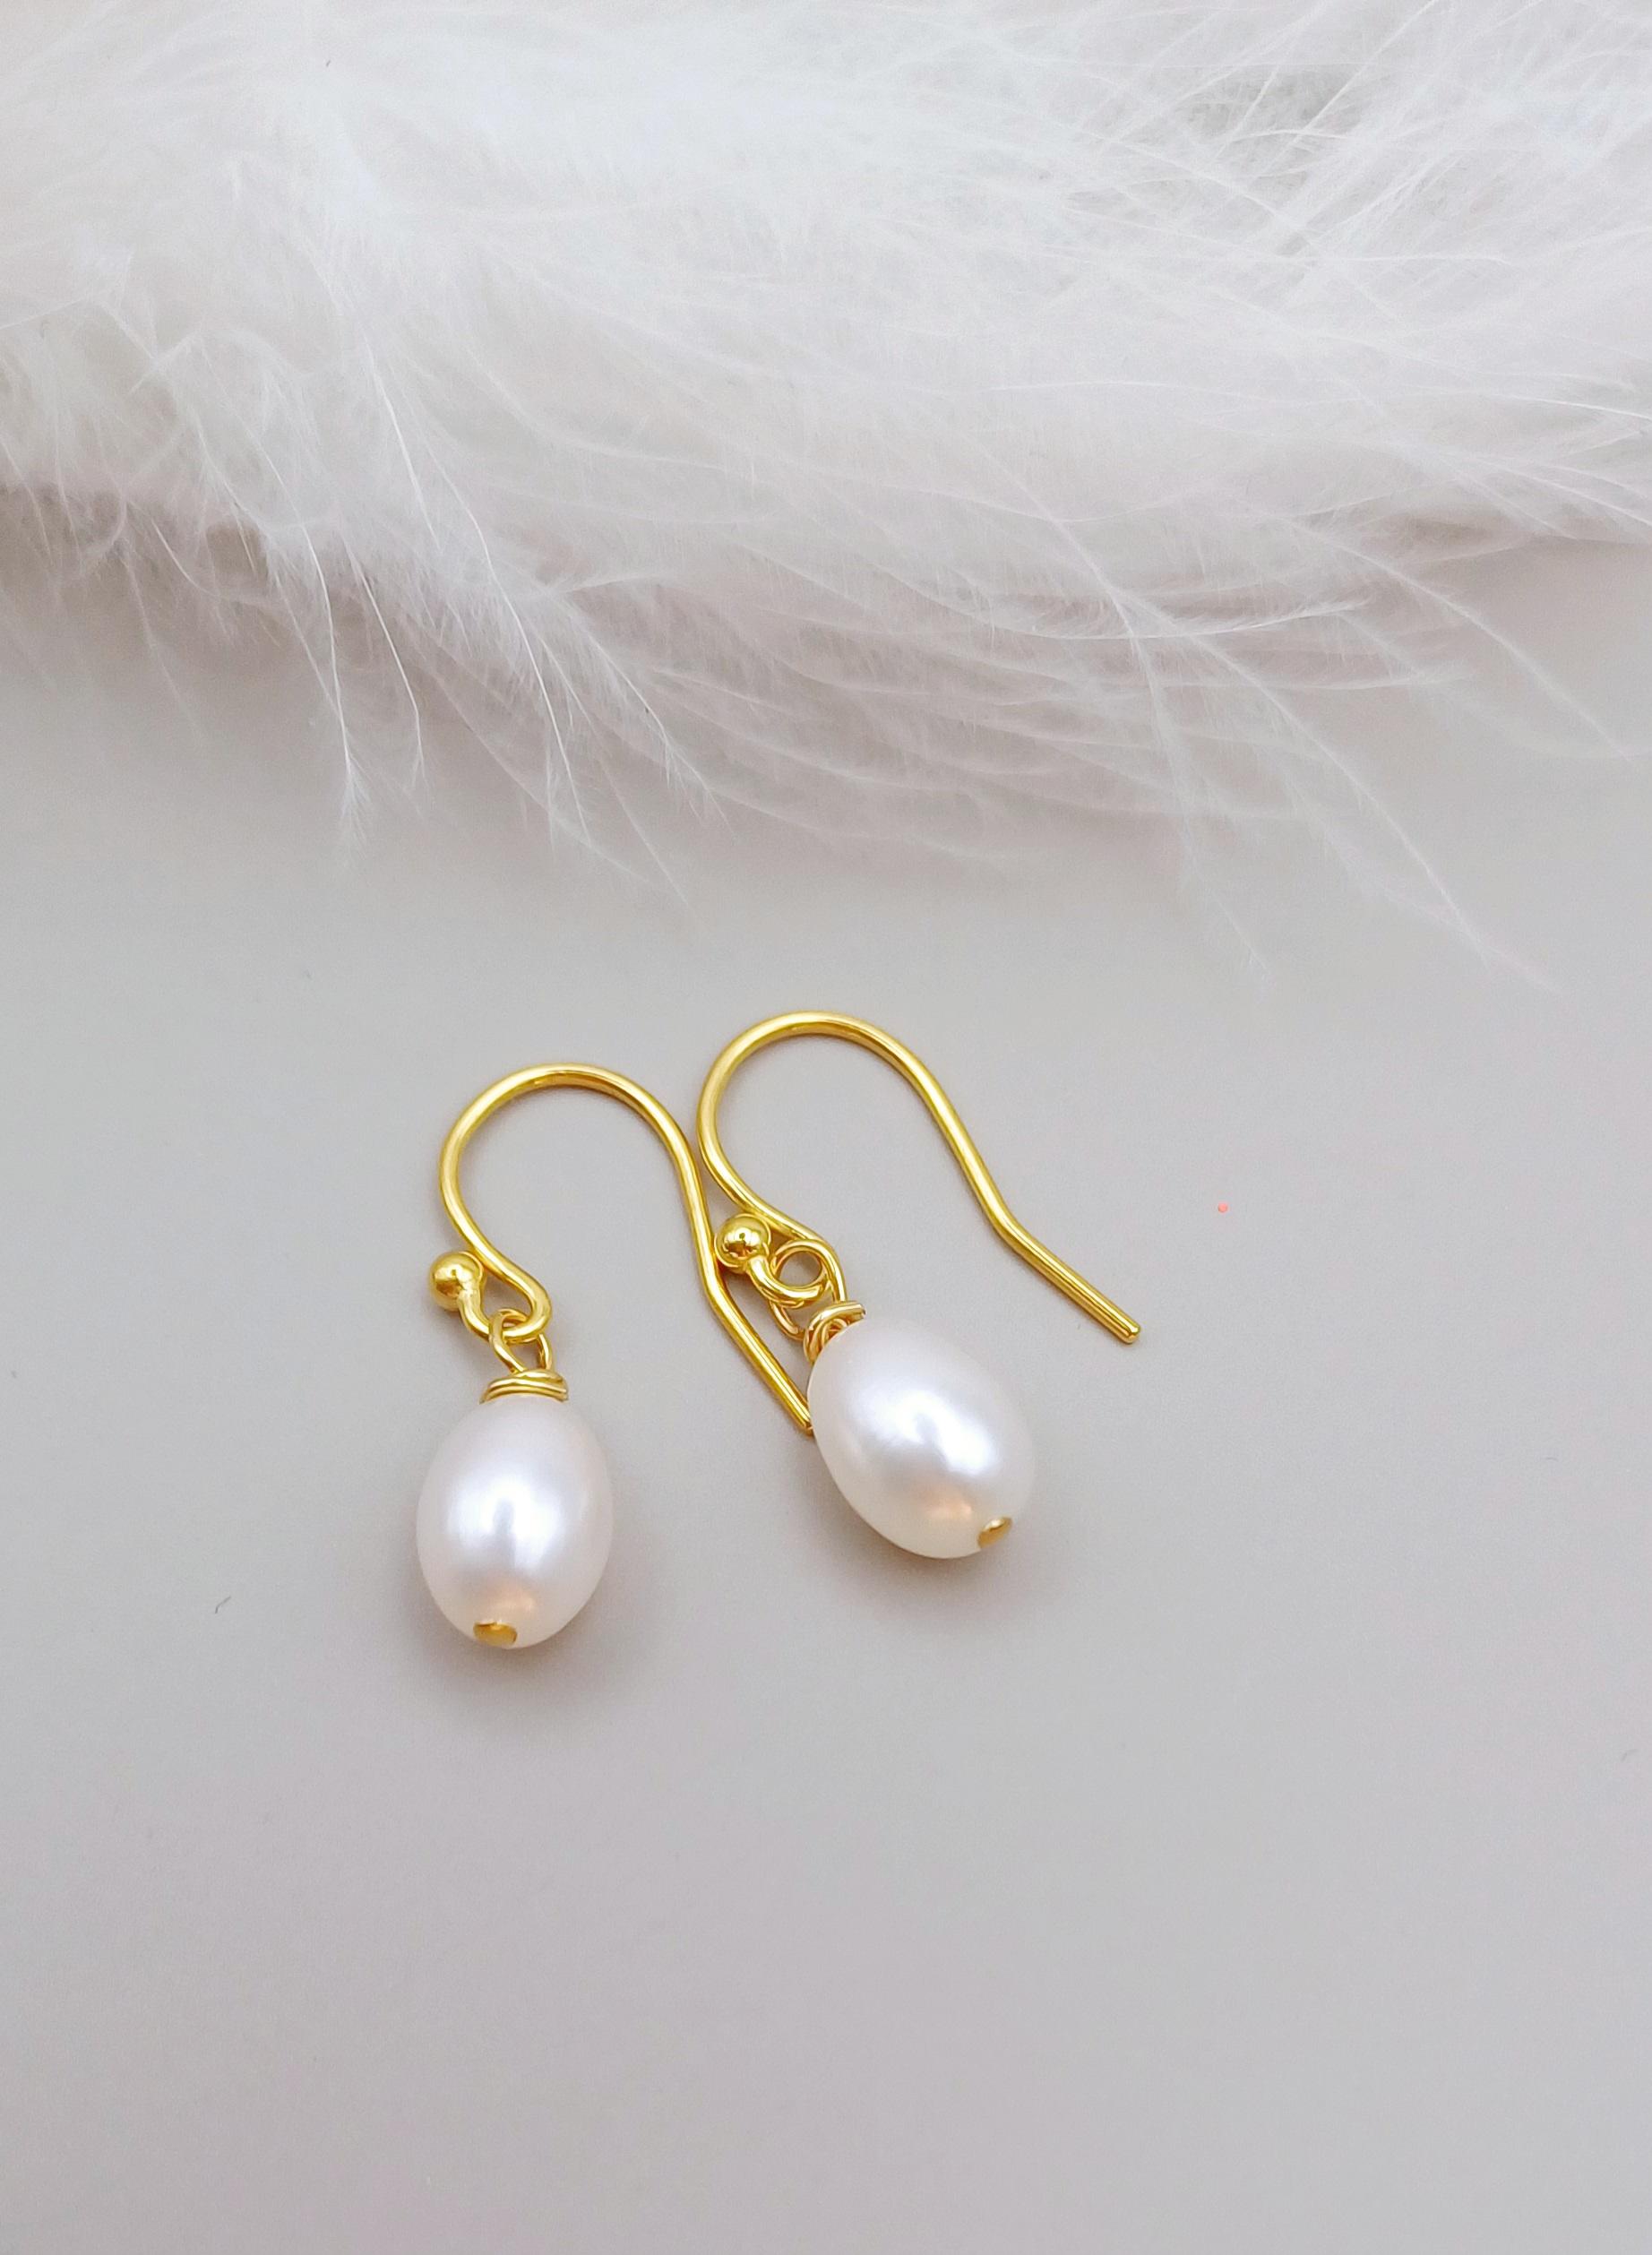 EARRINGS - Gold Vermeil Pearl Drop Earrings